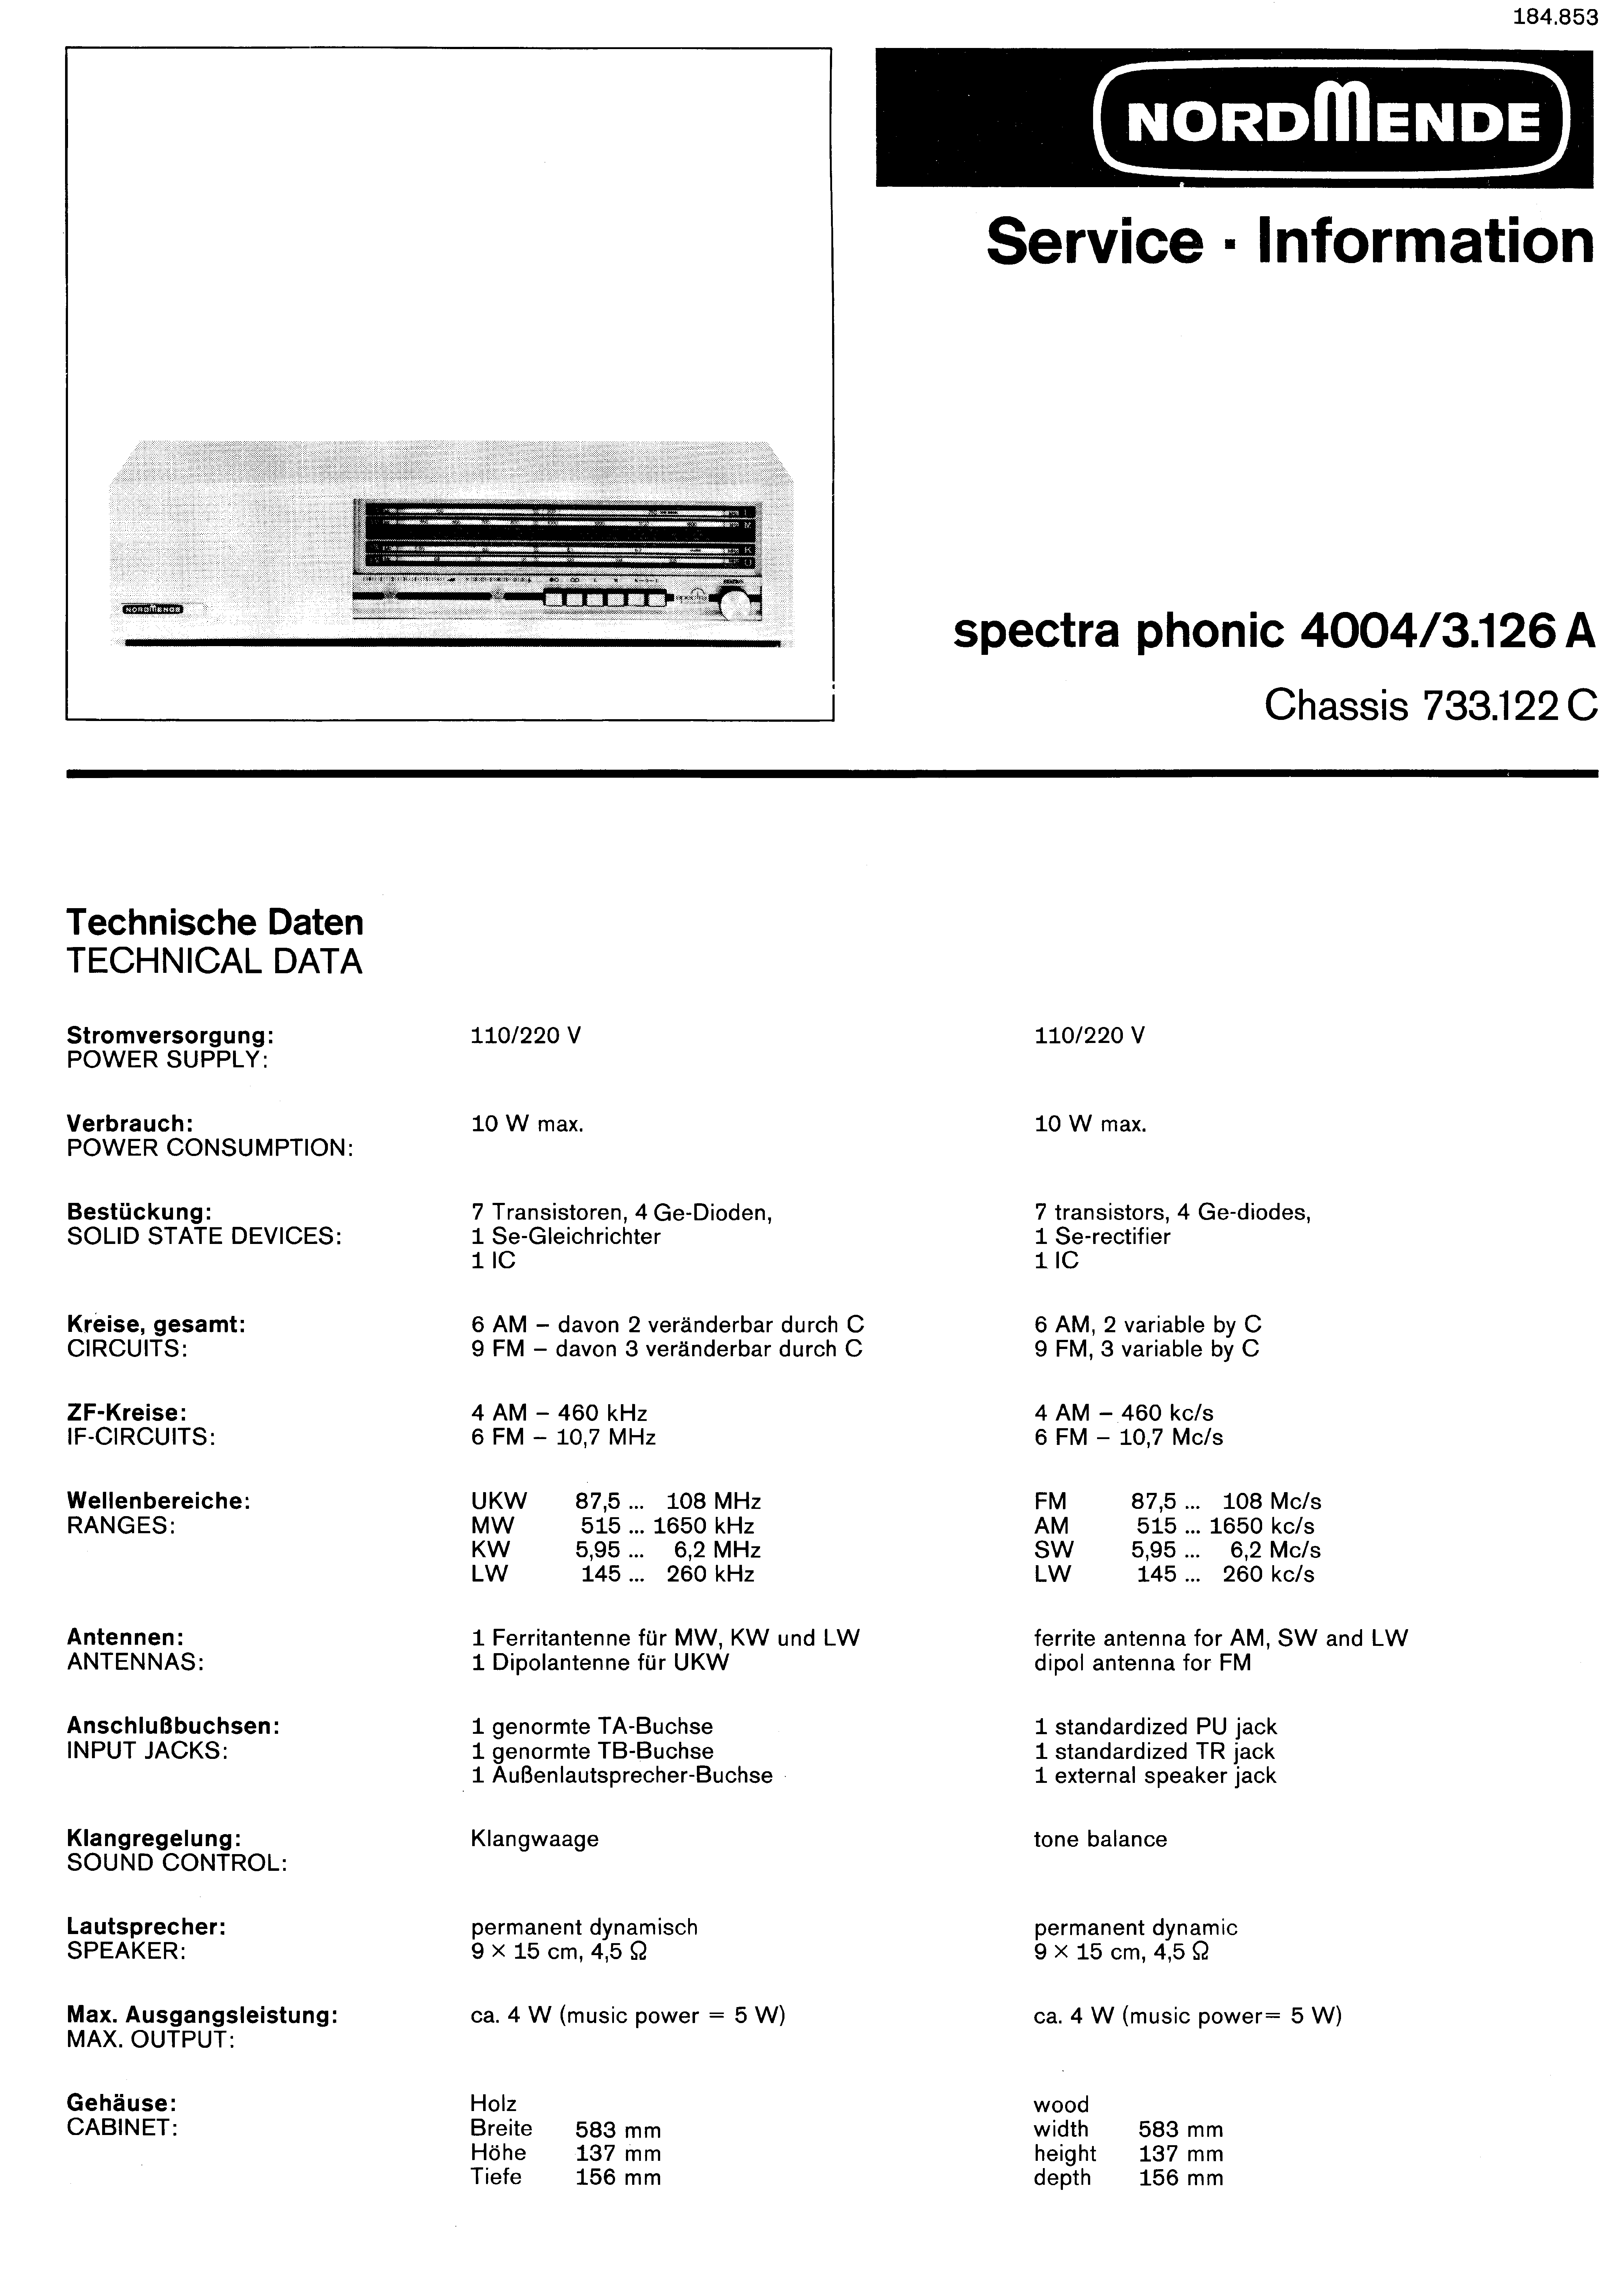 Service Manual-Anleitung für Nordmende Stereo 5005 4.134 A 